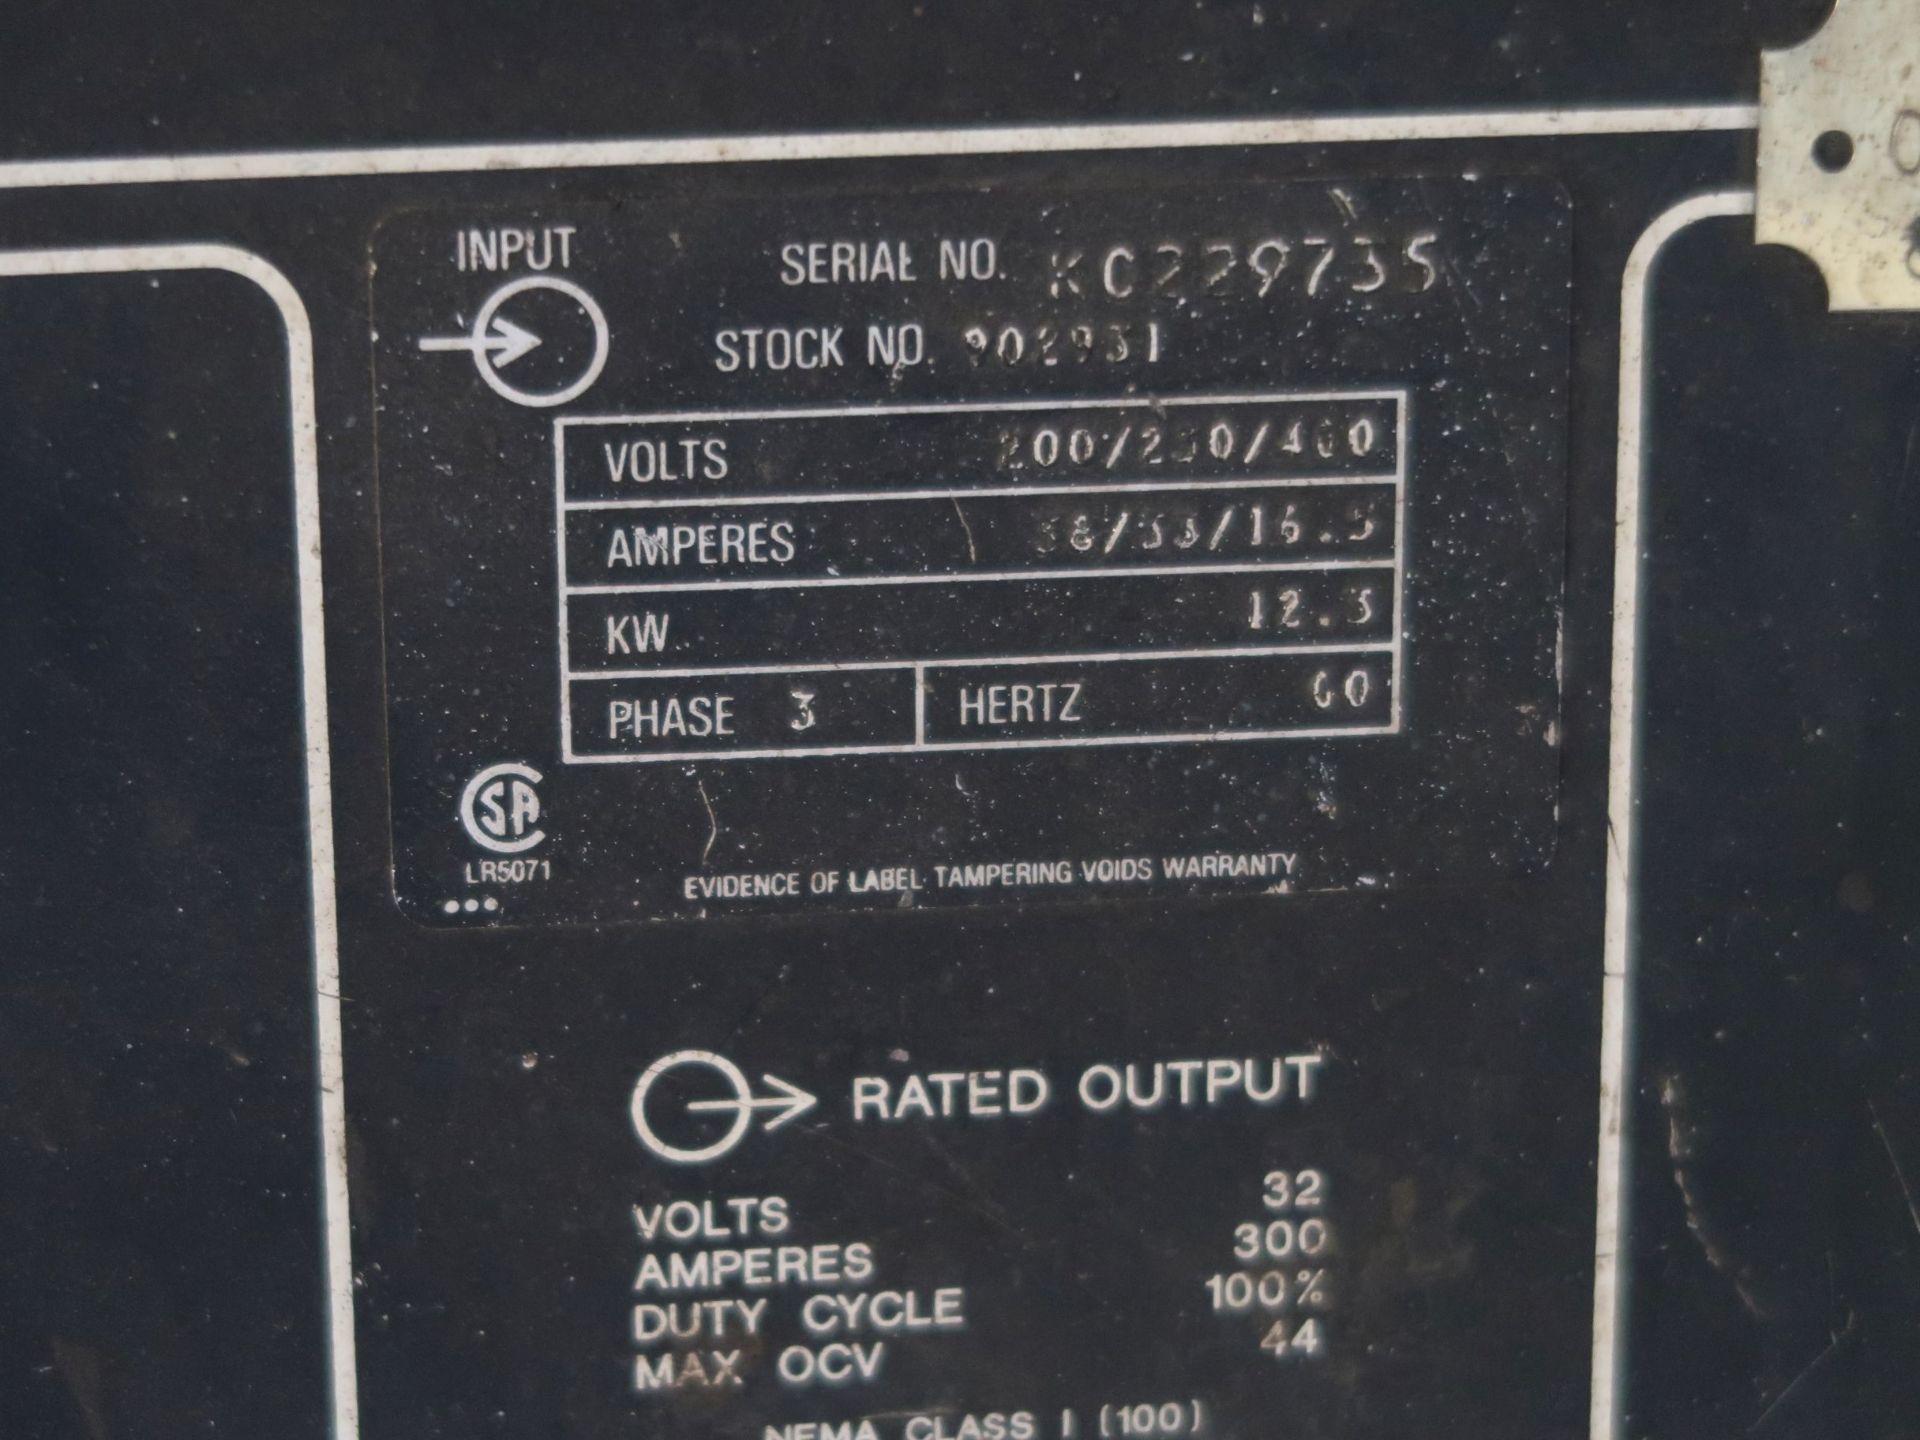 300 AMP MILLER MODEL CP-300 CONSTANT VOLTAGE DC ARC WELDING POWER SOURCE; S/N KC229735 WITH MILLER - Image 4 of 4